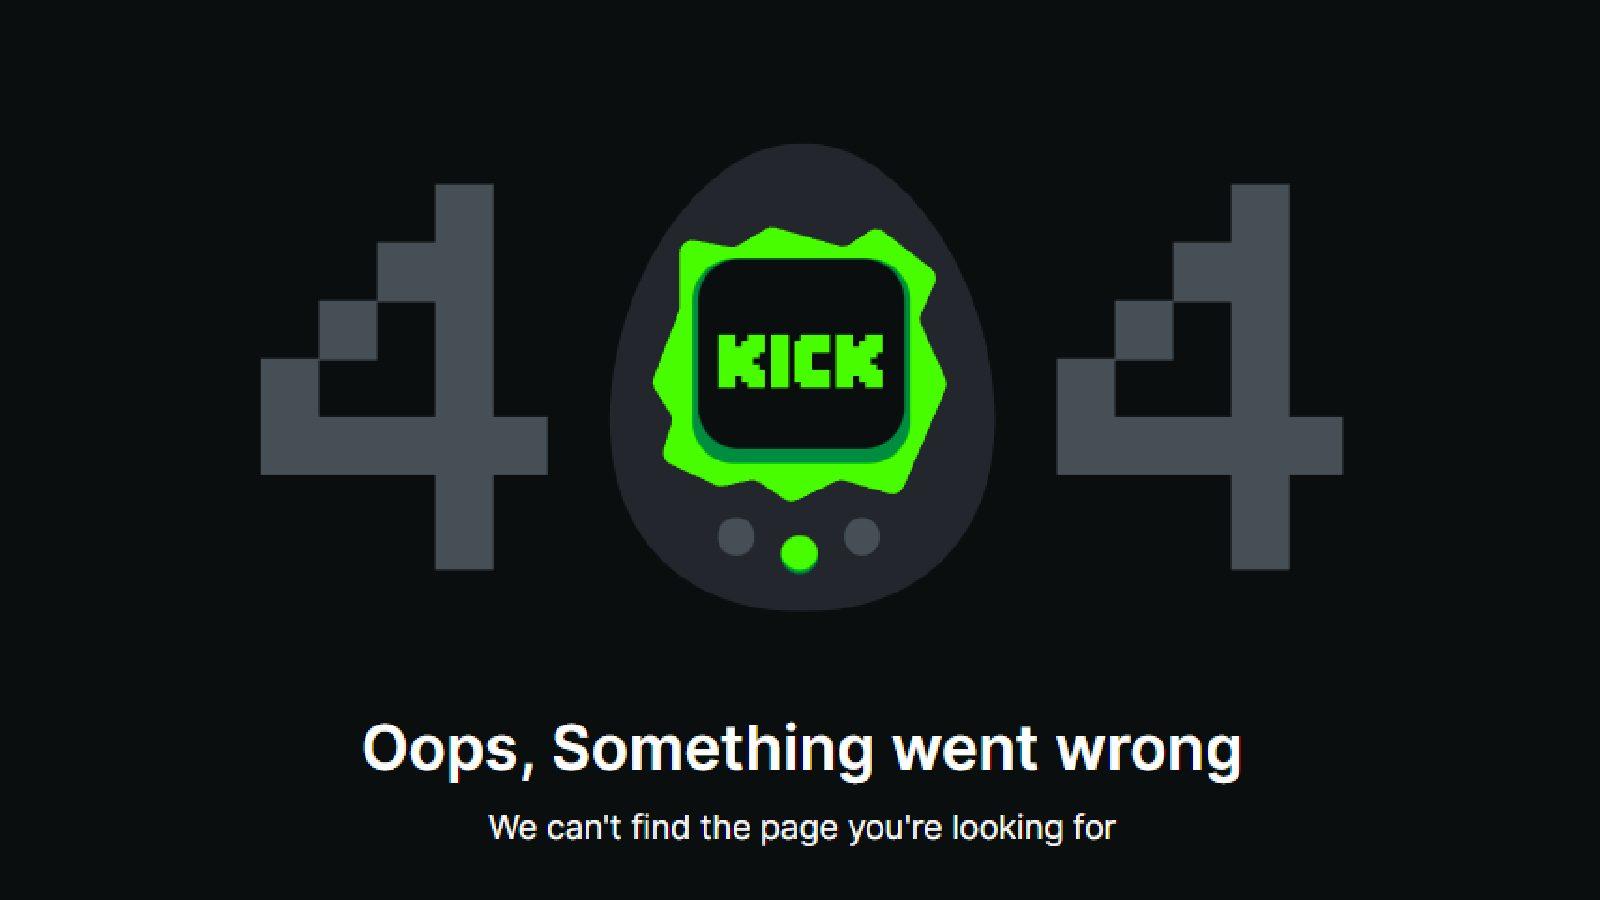 Kick 404 error message.